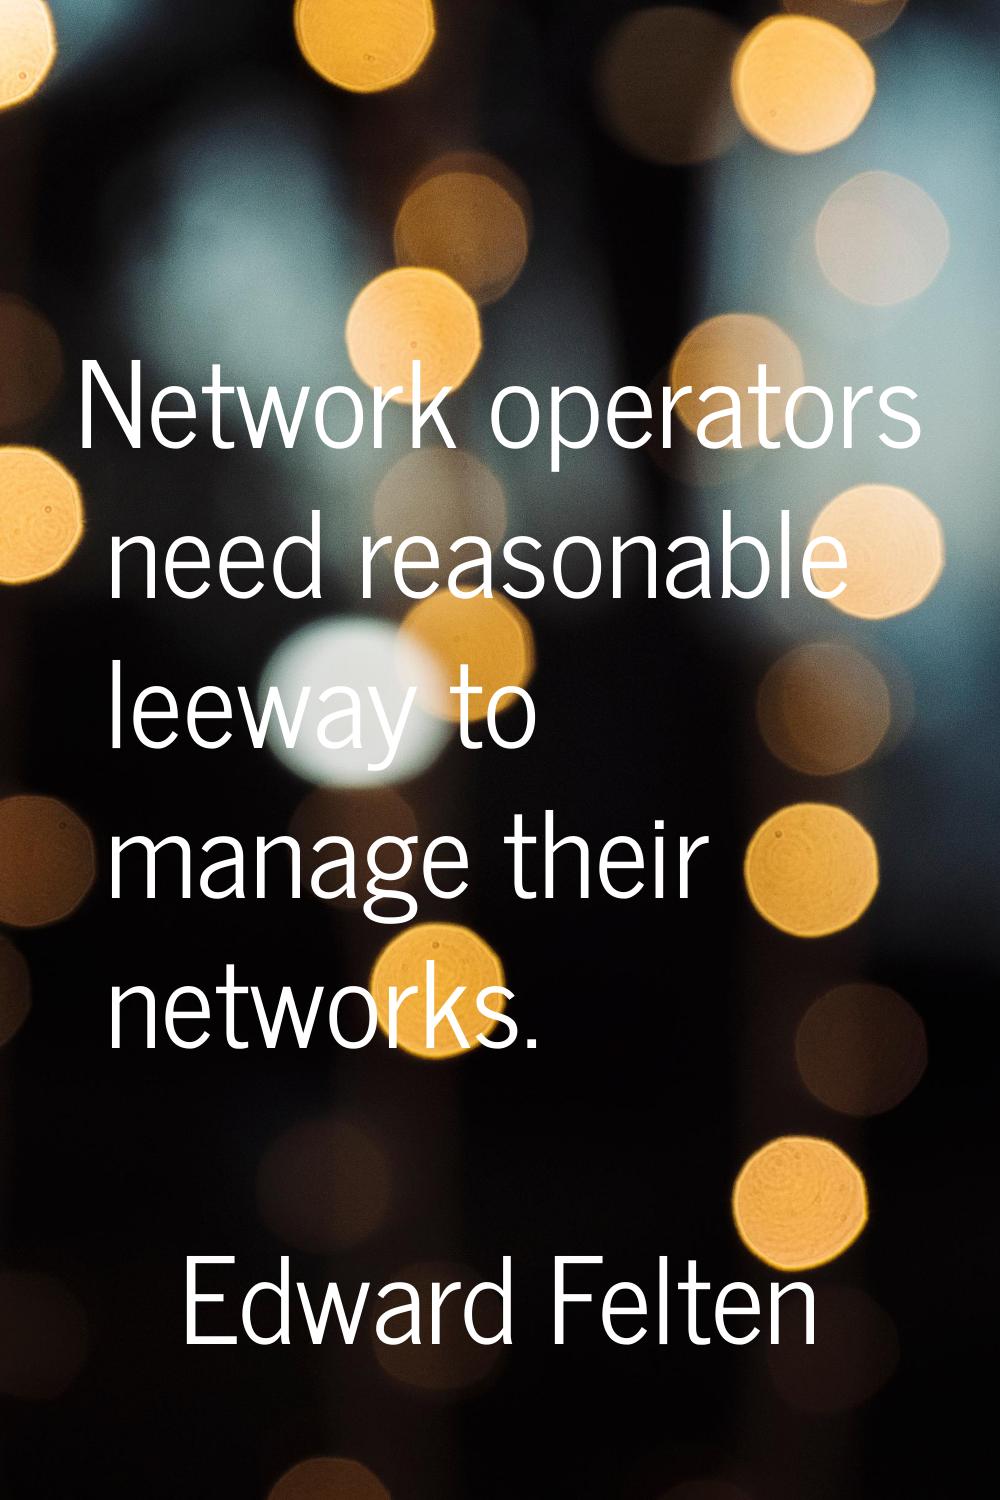 Network operators need reasonable leeway to manage their networks.